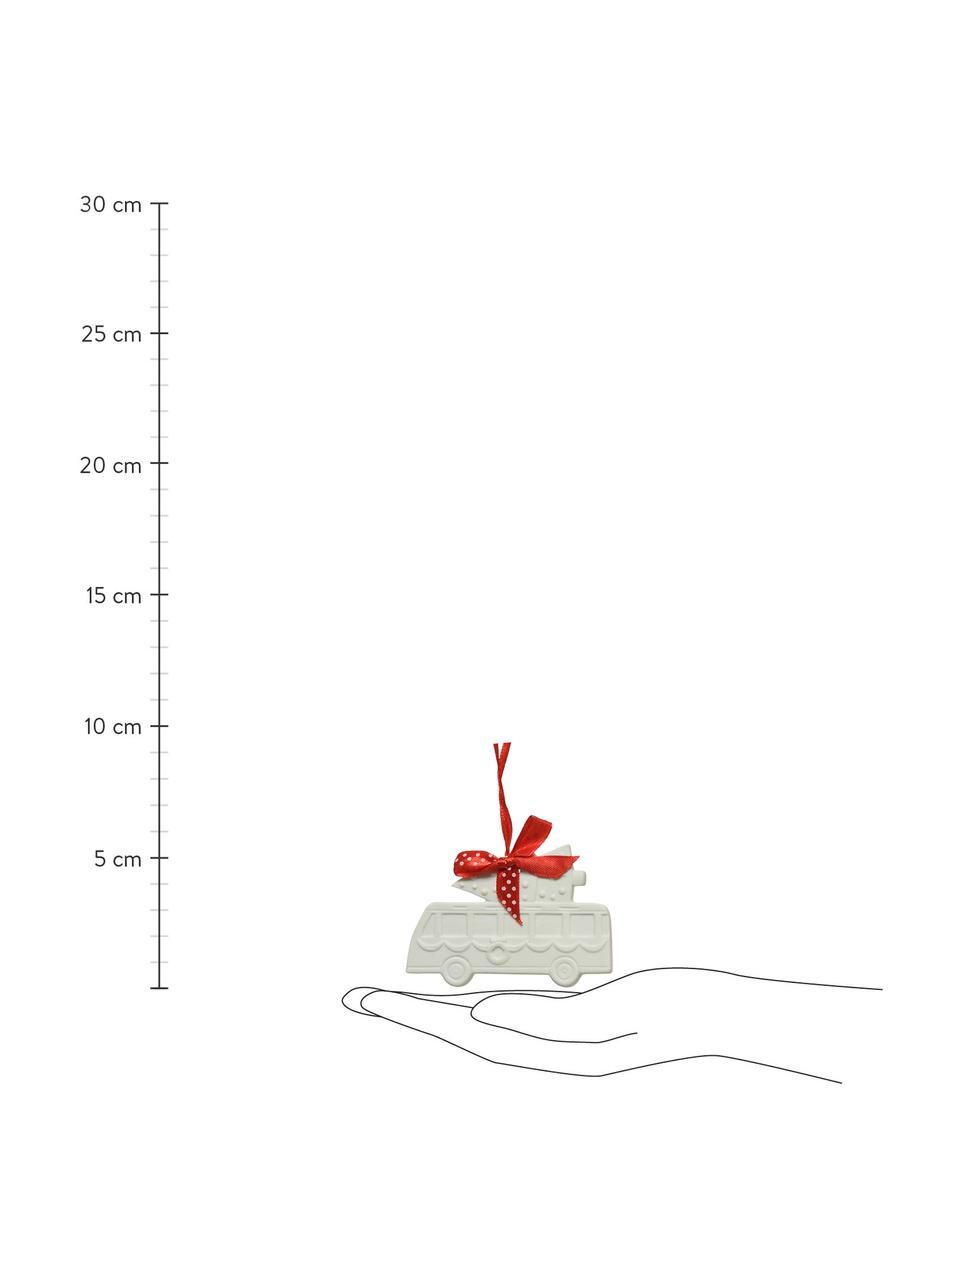 Adornos navideños Vehicles, 4 uds., Figura: porcelana, Blanco, rojo, An 8 x Al 10 cm